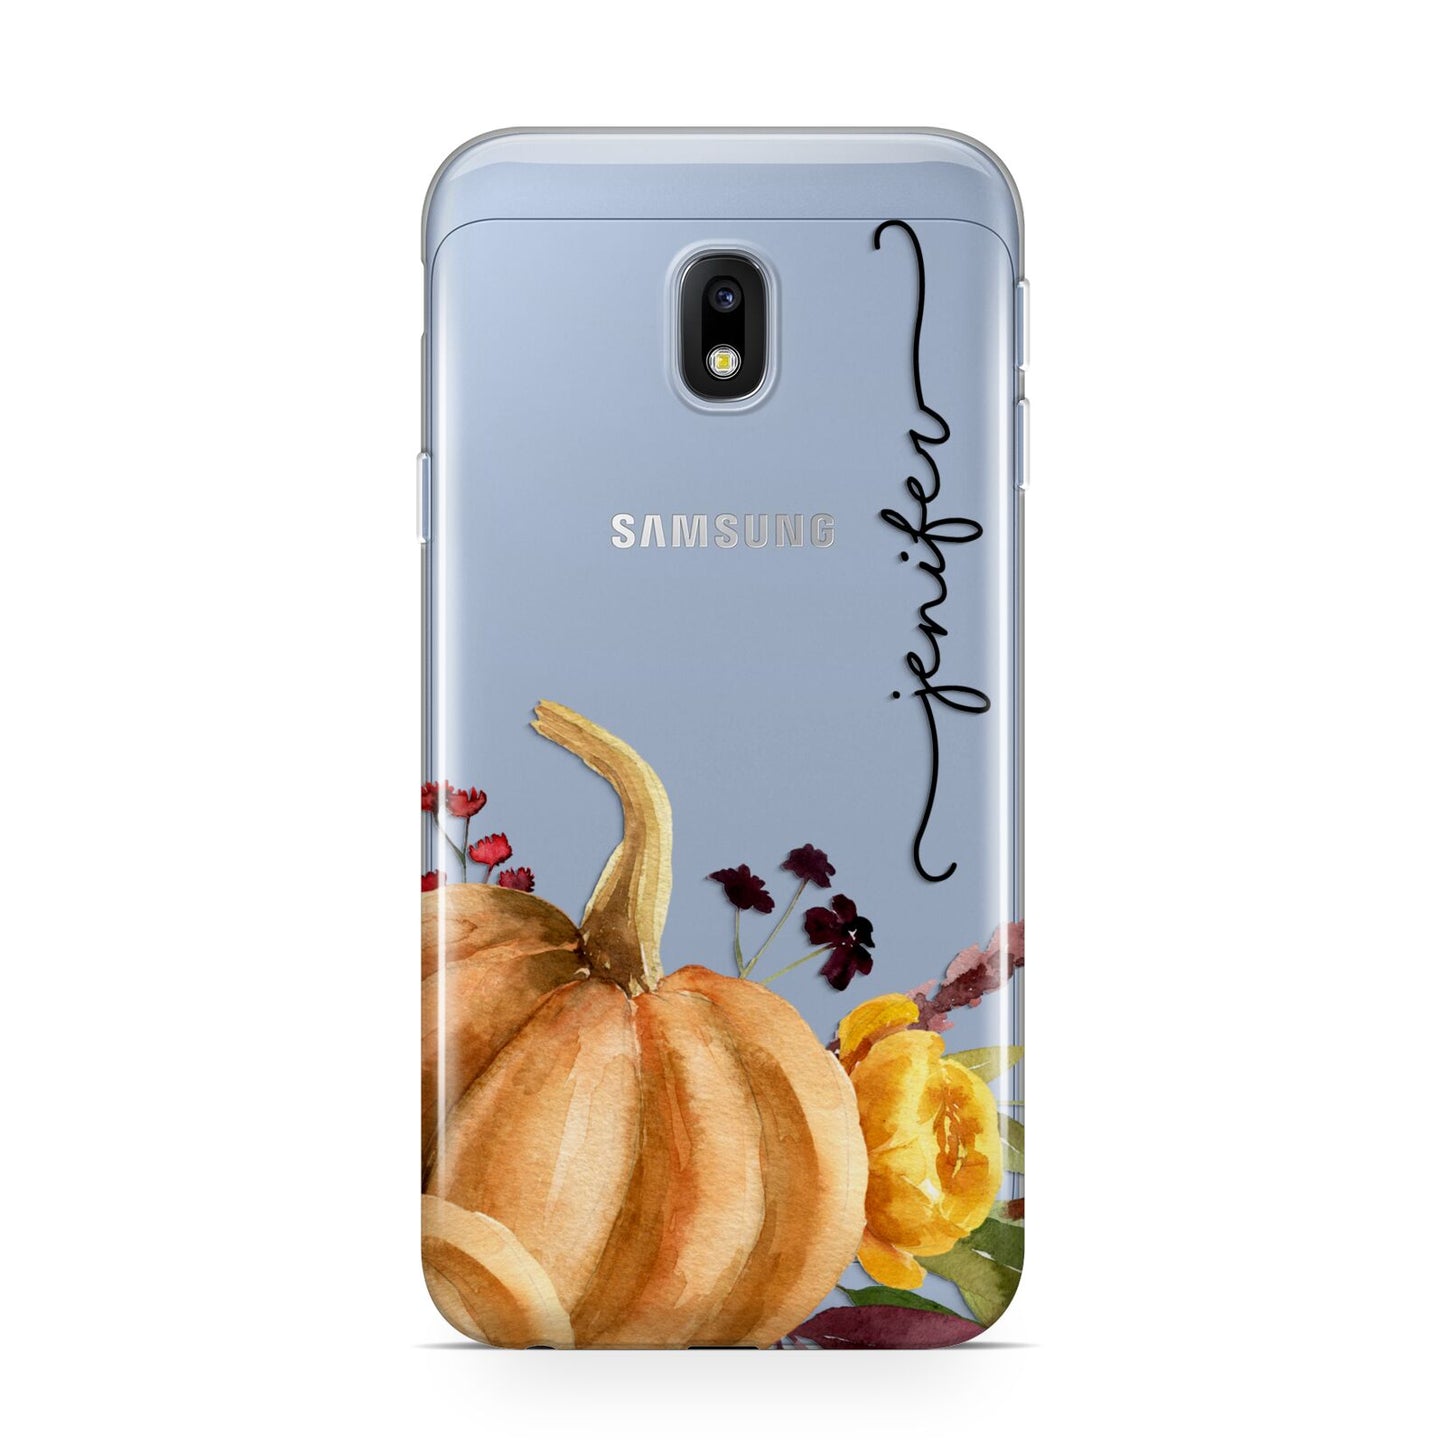 Watercolour Pumpkins with Black Vertical Text Samsung Galaxy J3 2017 Case